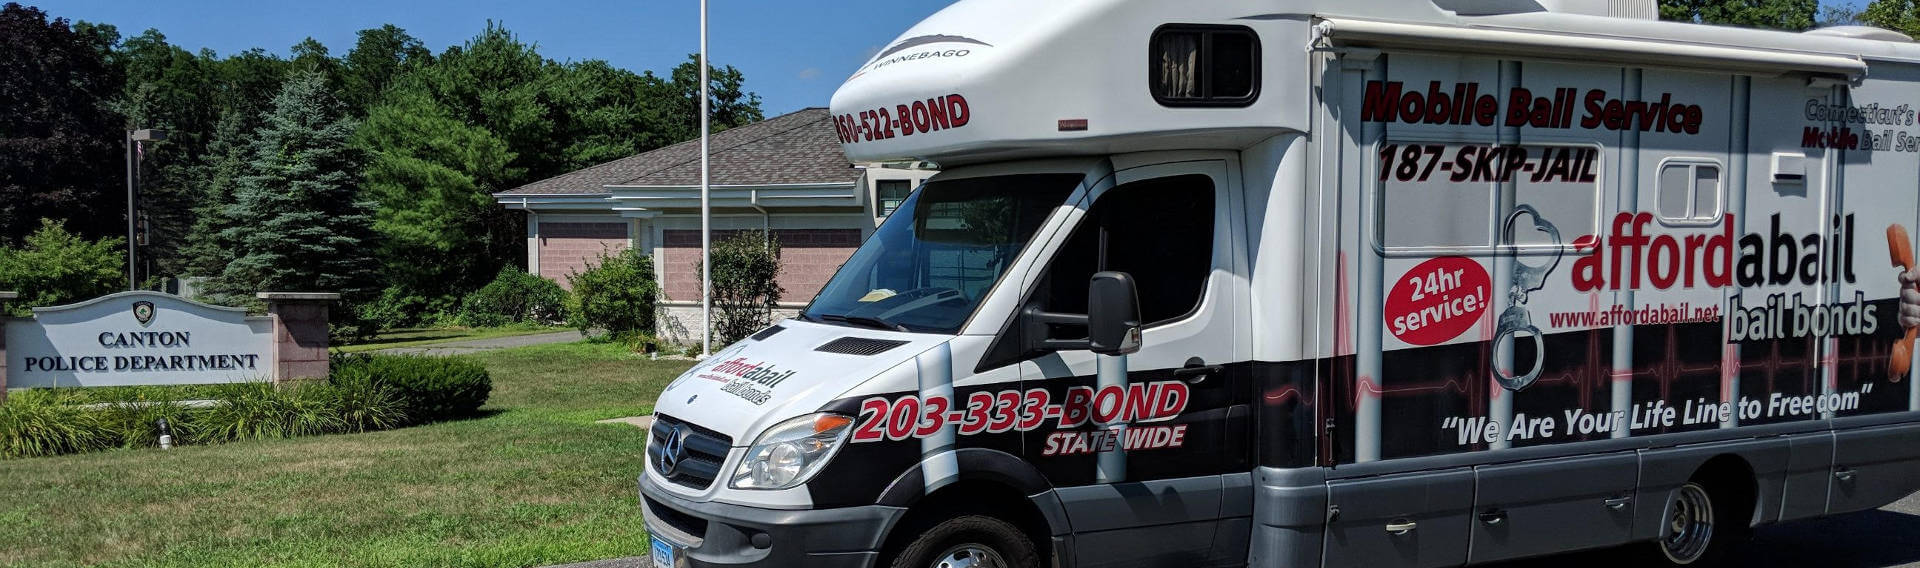 Mobile bail bonds service in Canton, CT